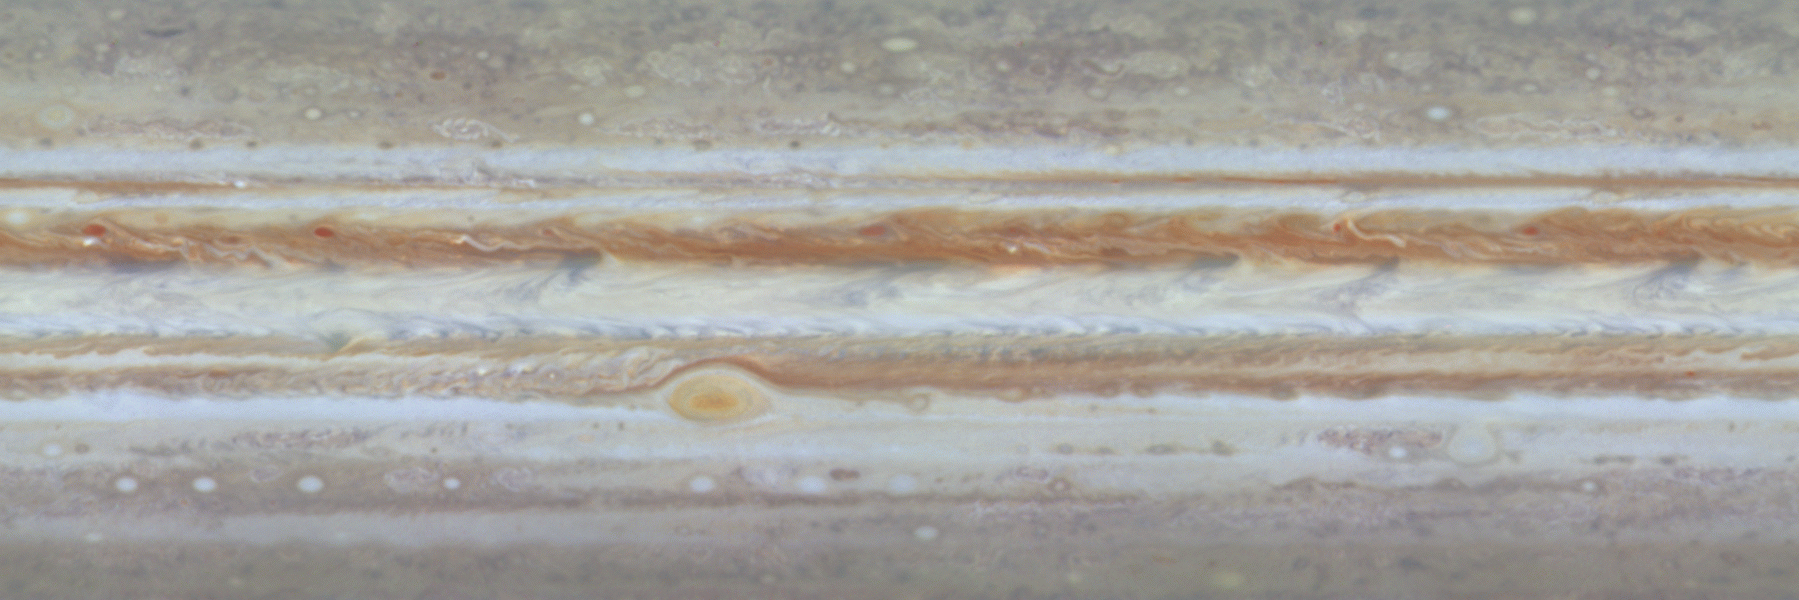 Jupiter cloud colors orange brown